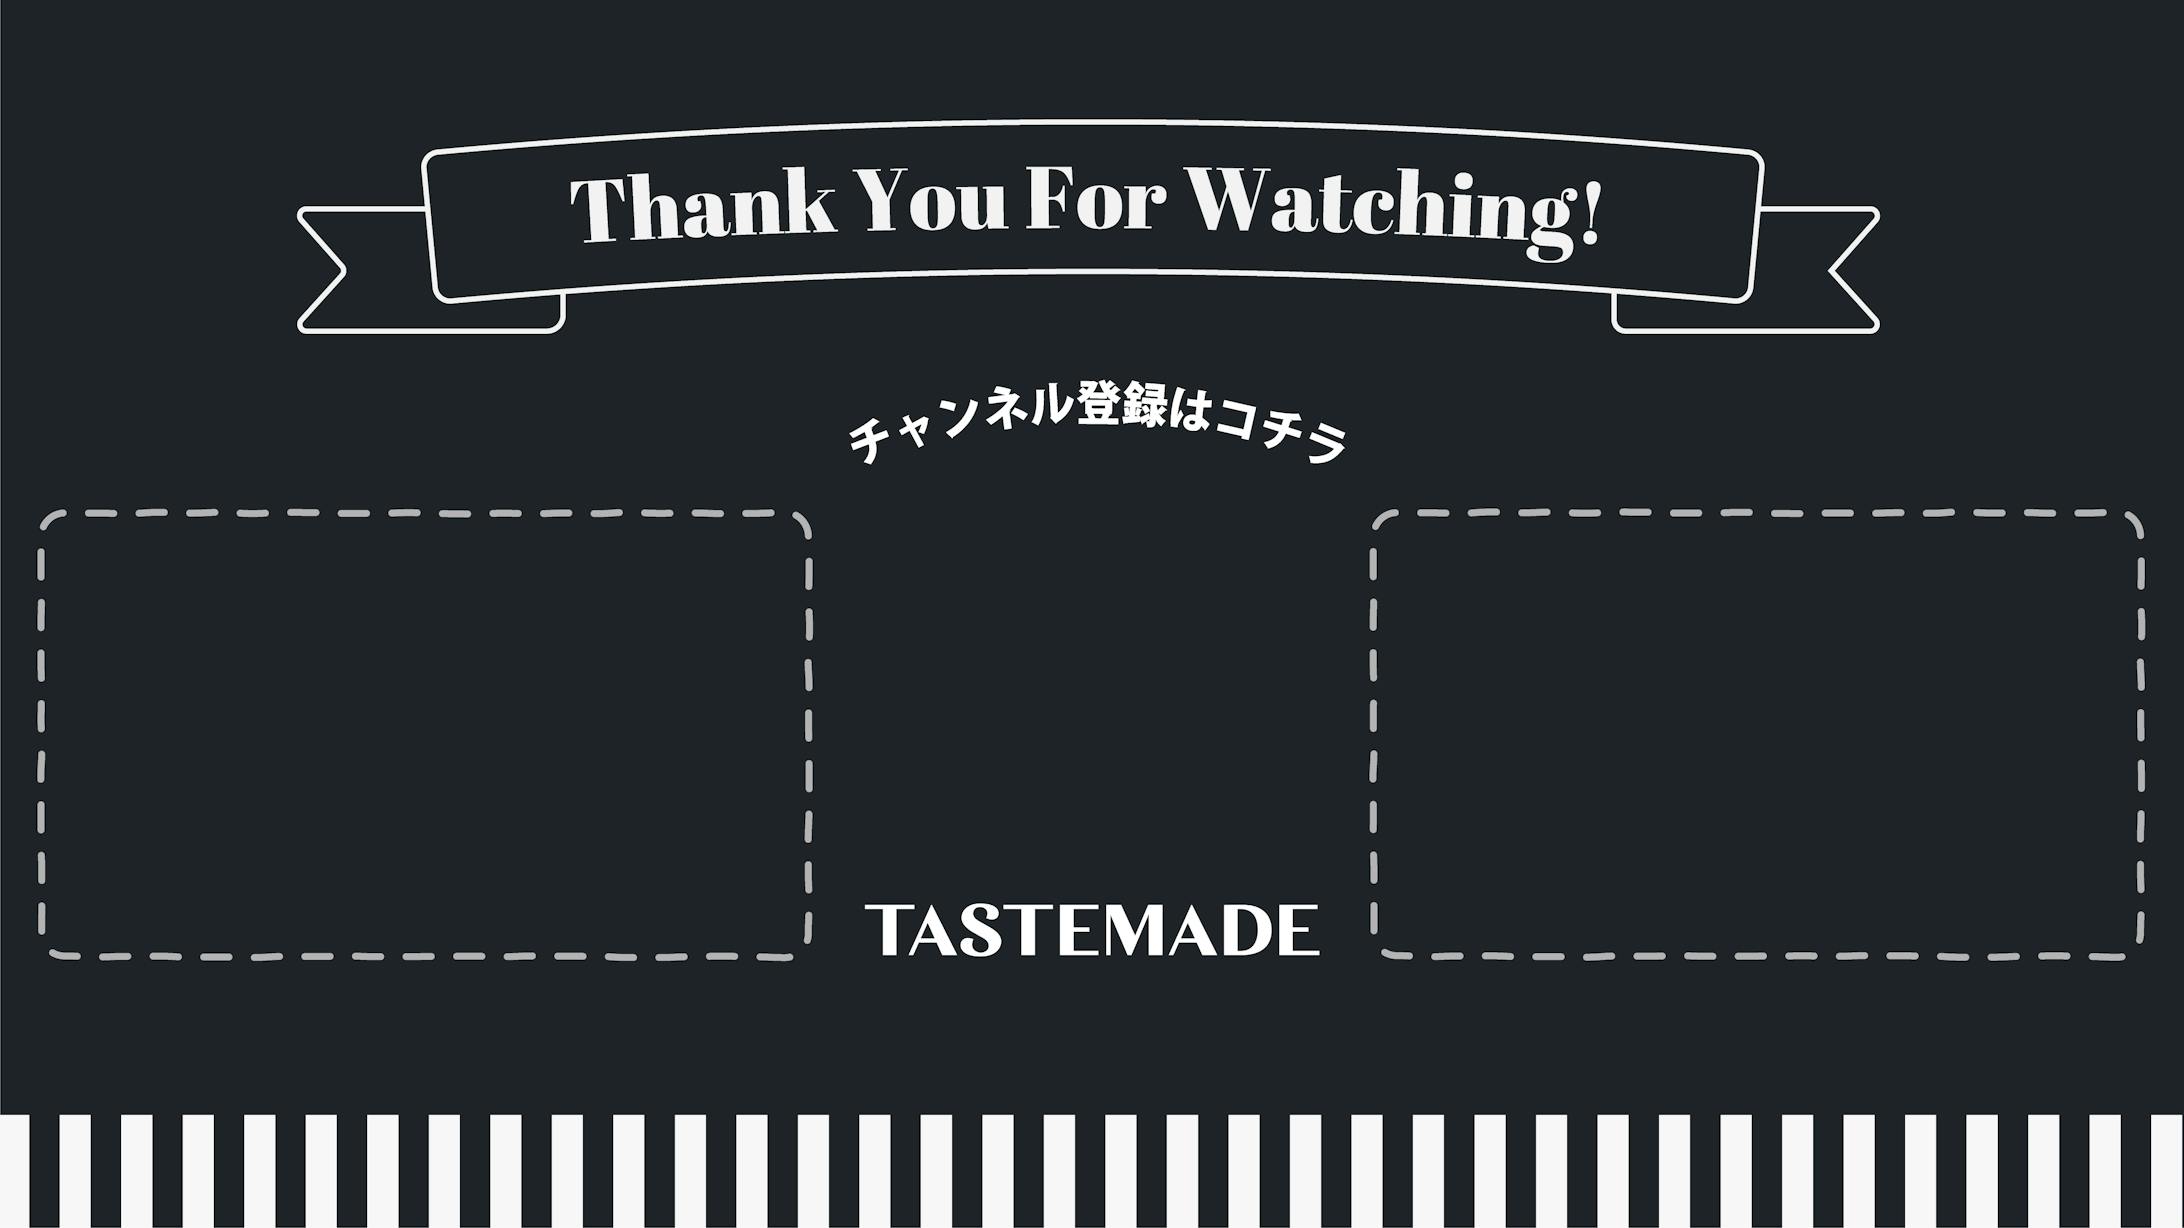 Tastemade Japan Youtube Endcard-1